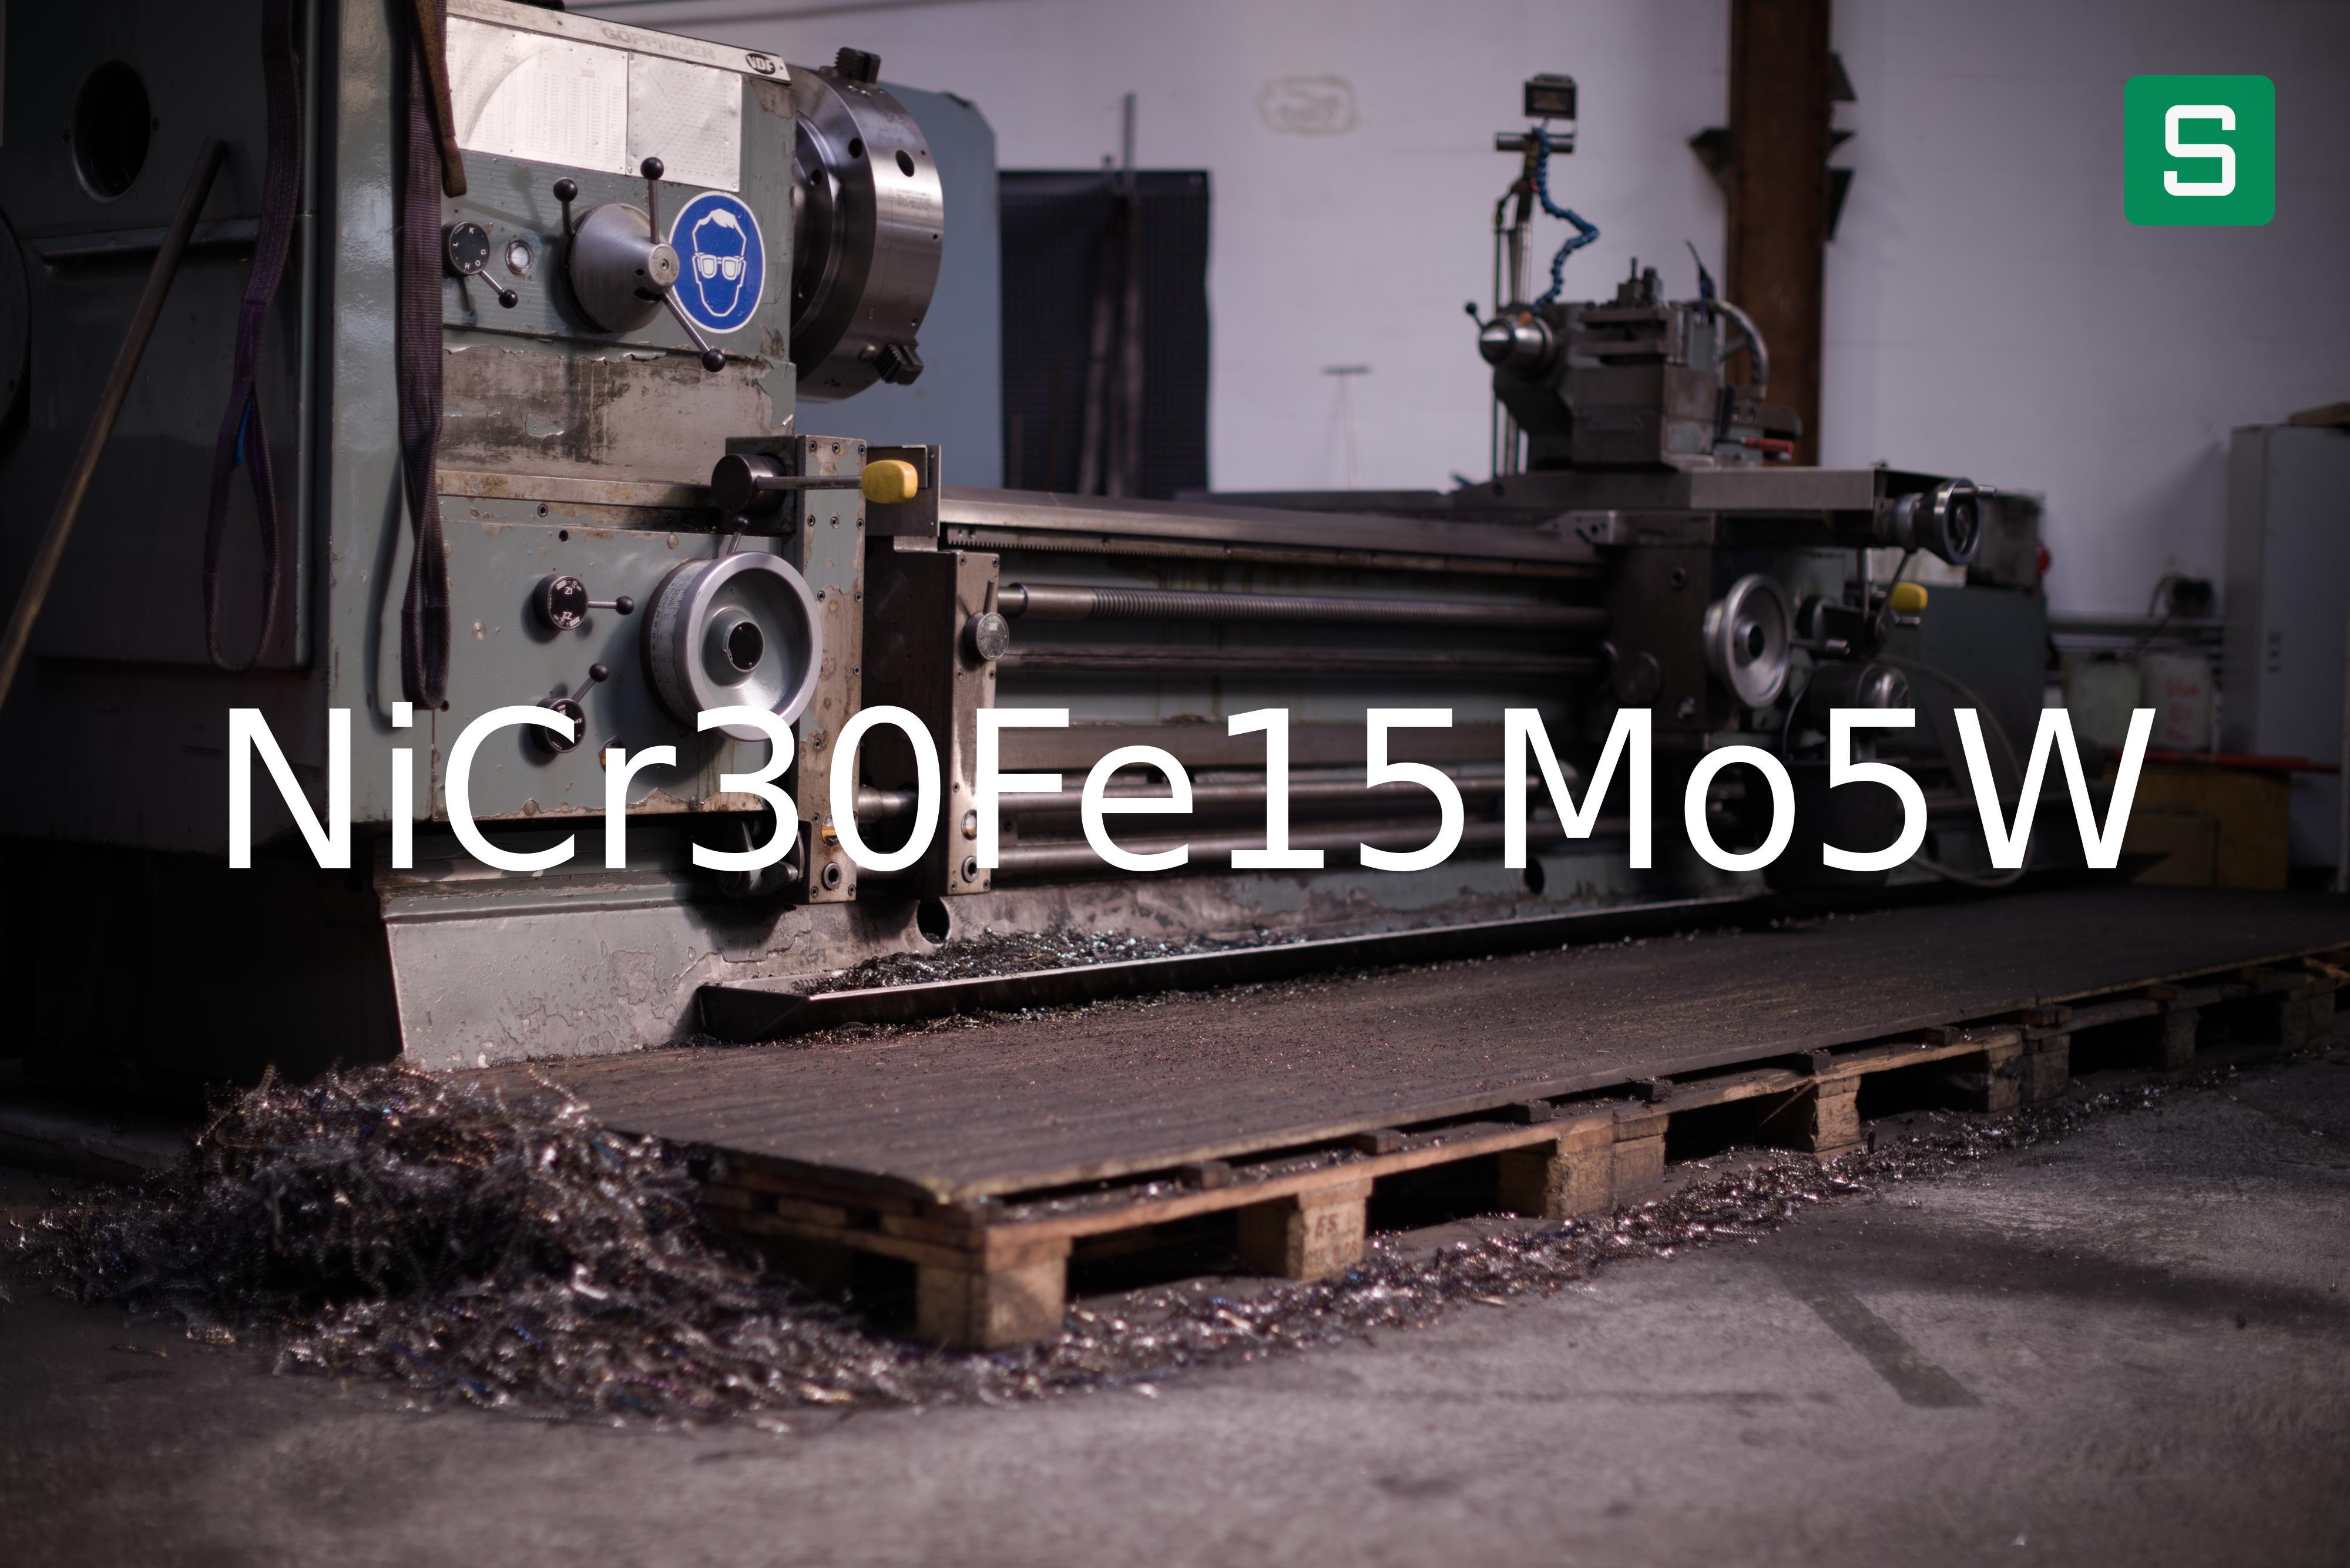 Steel Material: NiCr30Fe15Mo5W